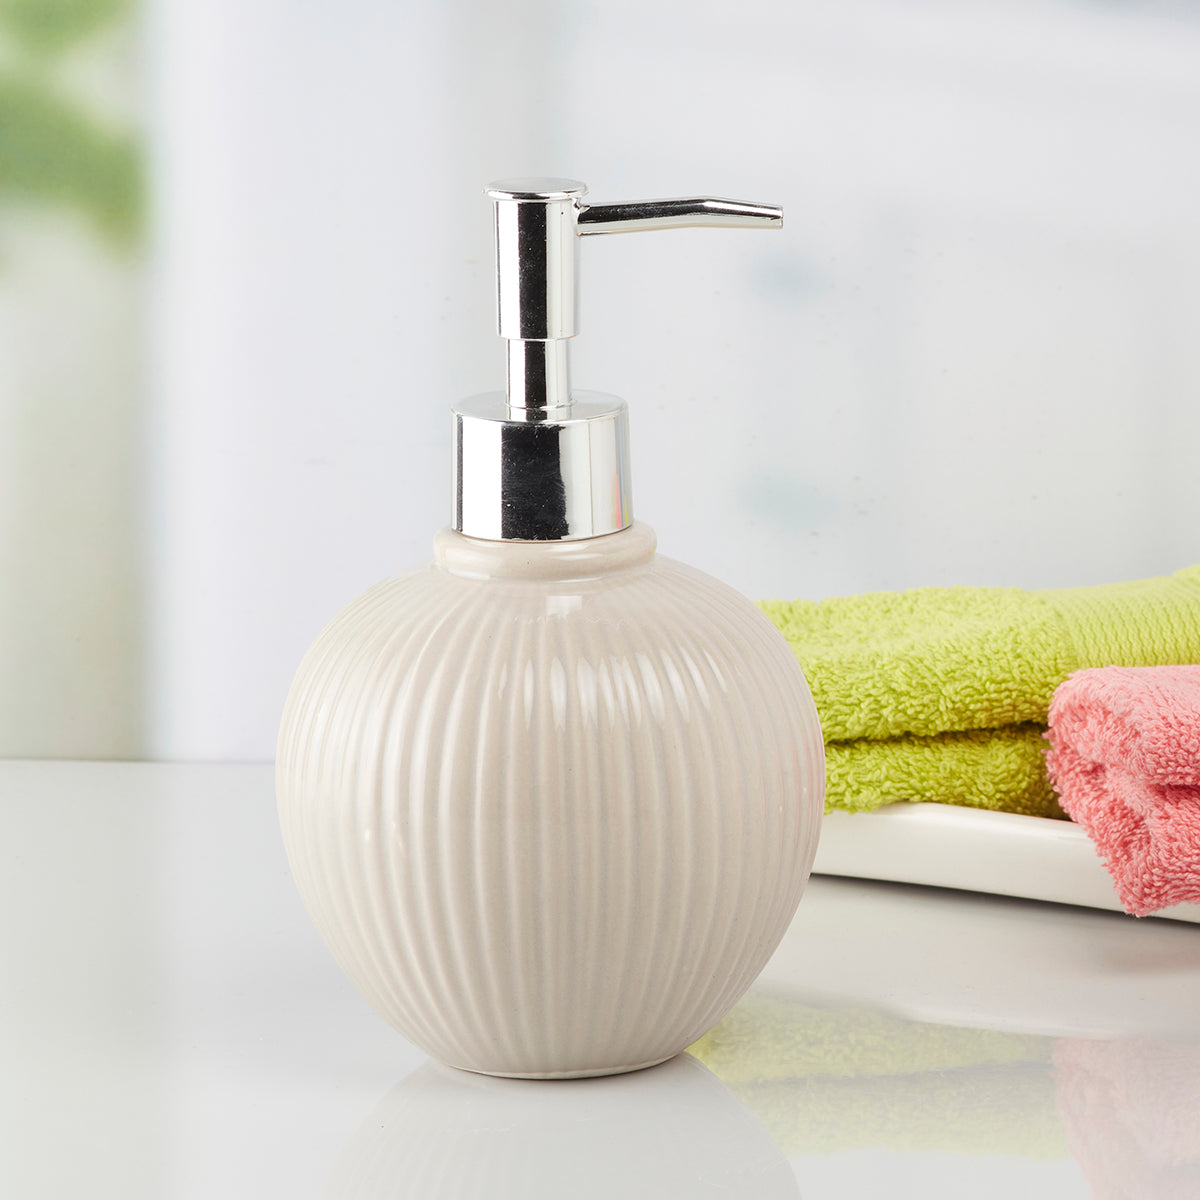 Ceramic Soap Dispenser handwash Pump for Bathroom, Set of 1, Beige (8050)